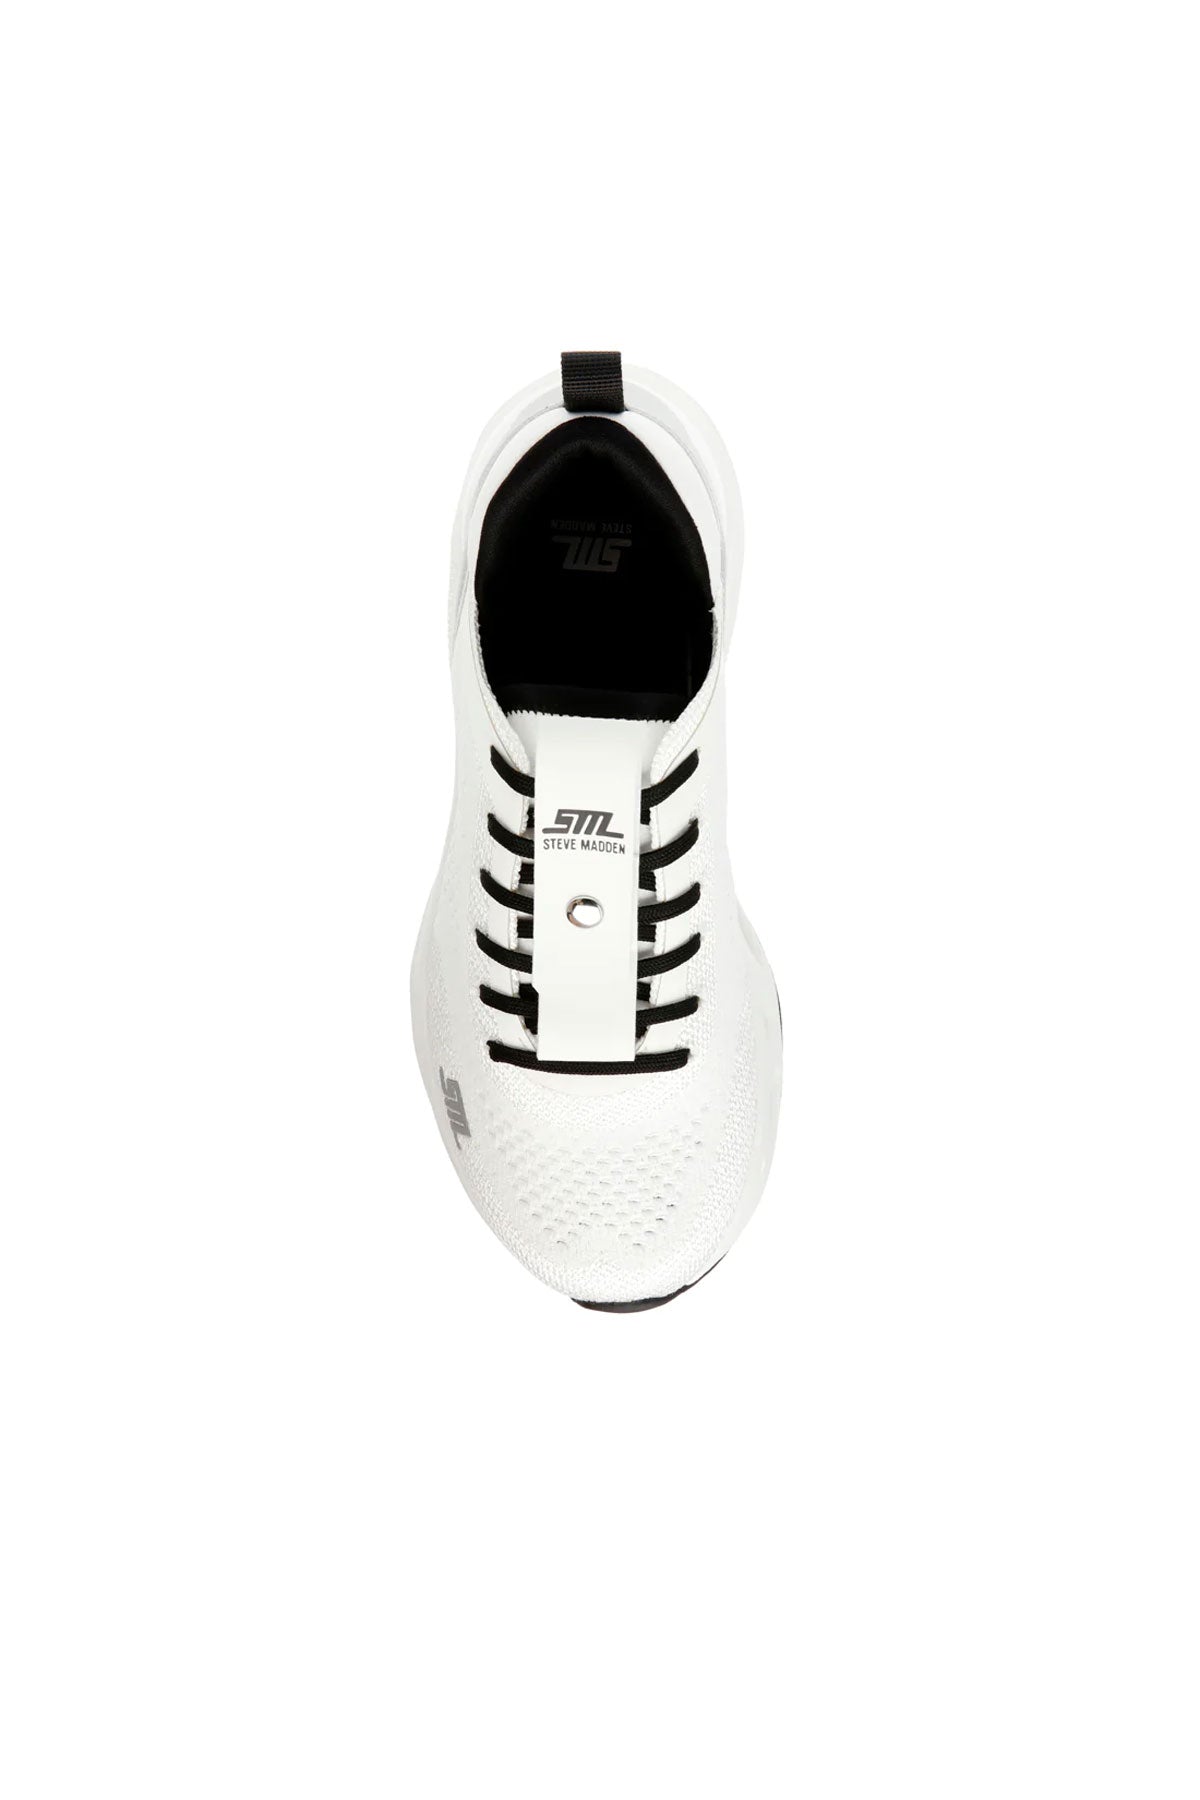 סטיב מאדן נעלי סניקרס Surge בצבע לבן לנשים-Steve Madden-36-נאקו